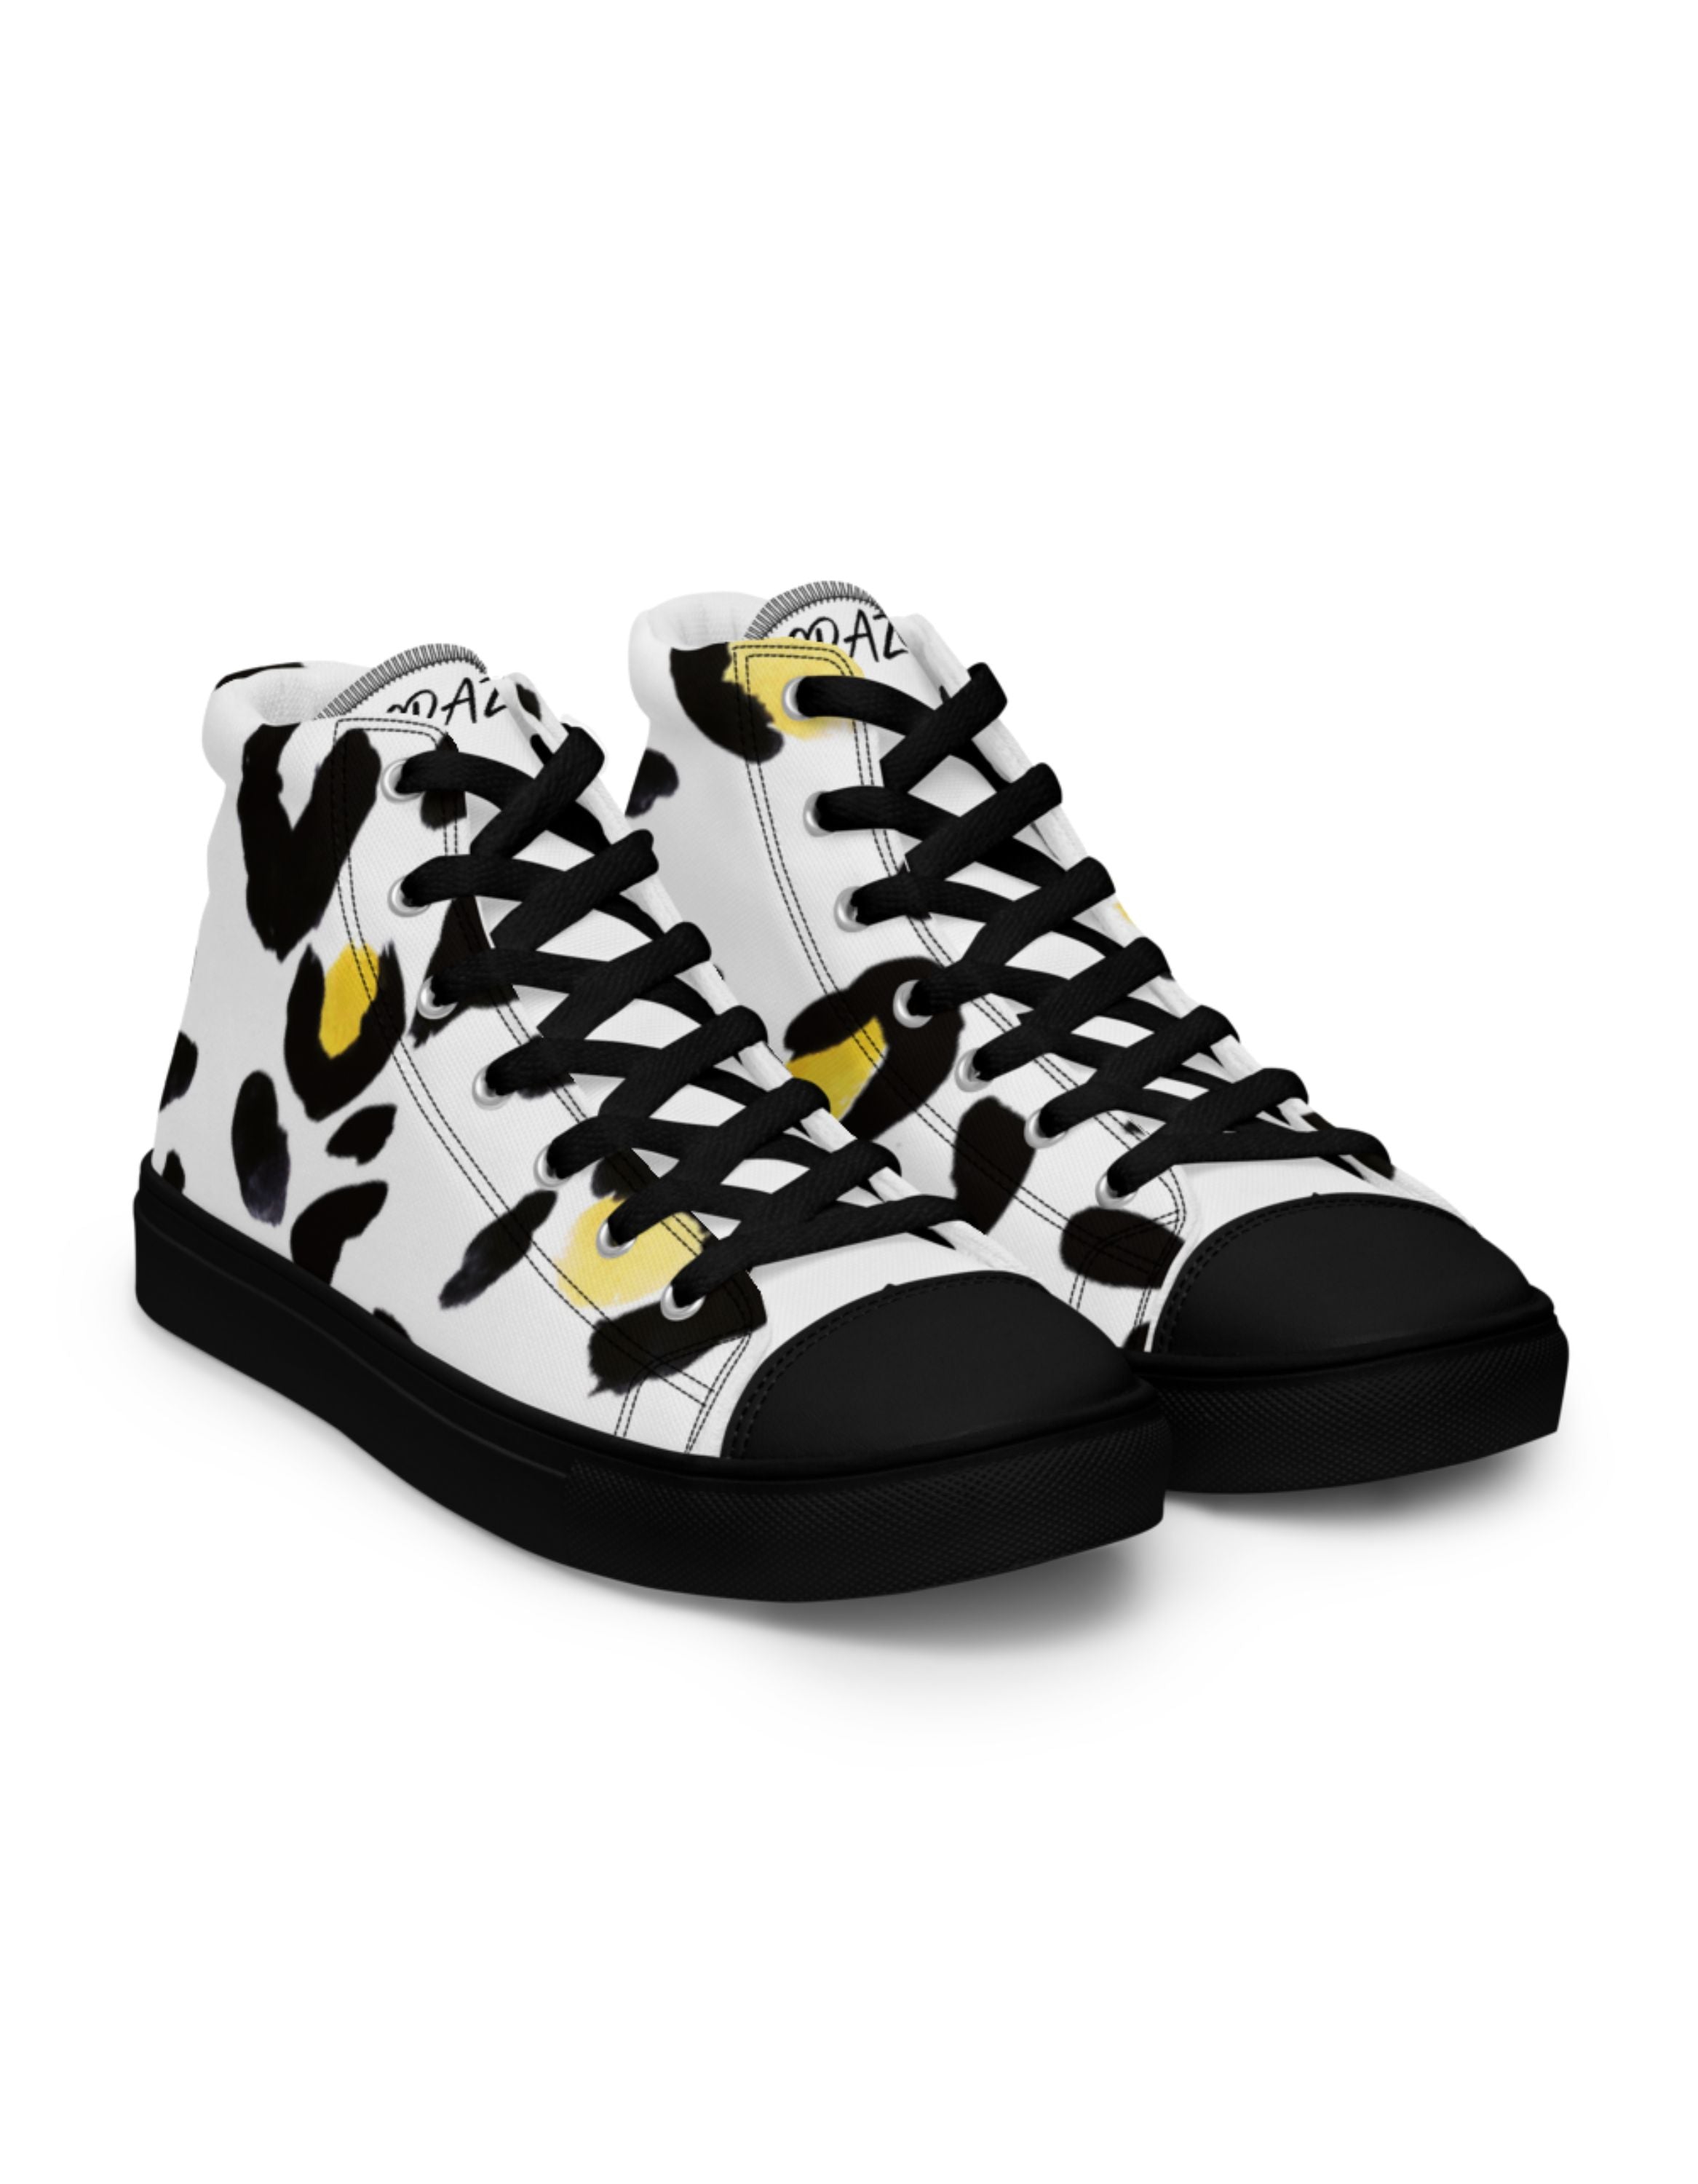 Leopard women's high canvas sneakers